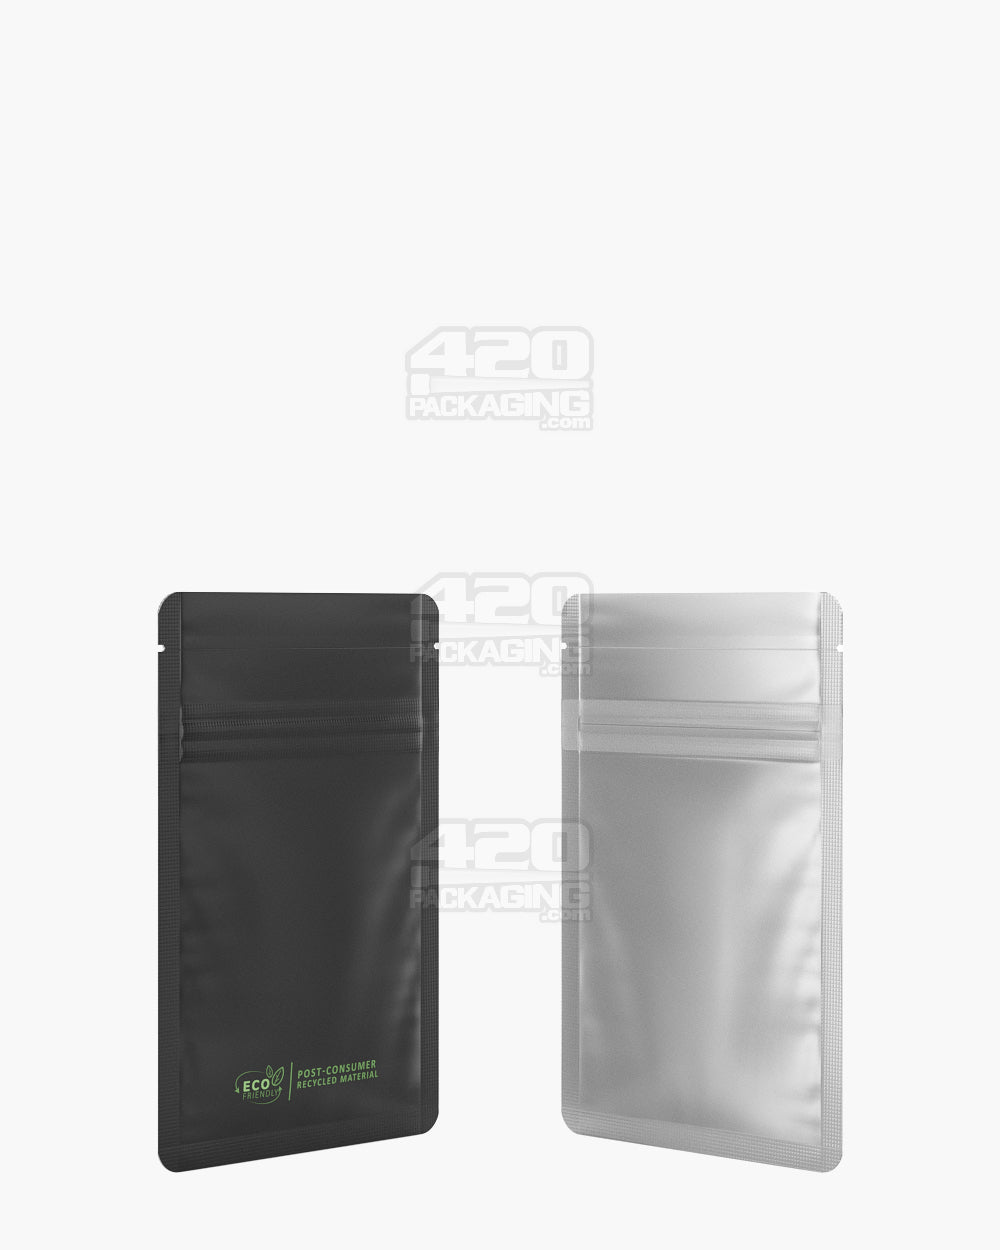 Matte-Black 3" x 4.5" PCR Vista Mylar Tamper Evident Bags w/ Tear Notch (1 gram) 1000/Box - 4